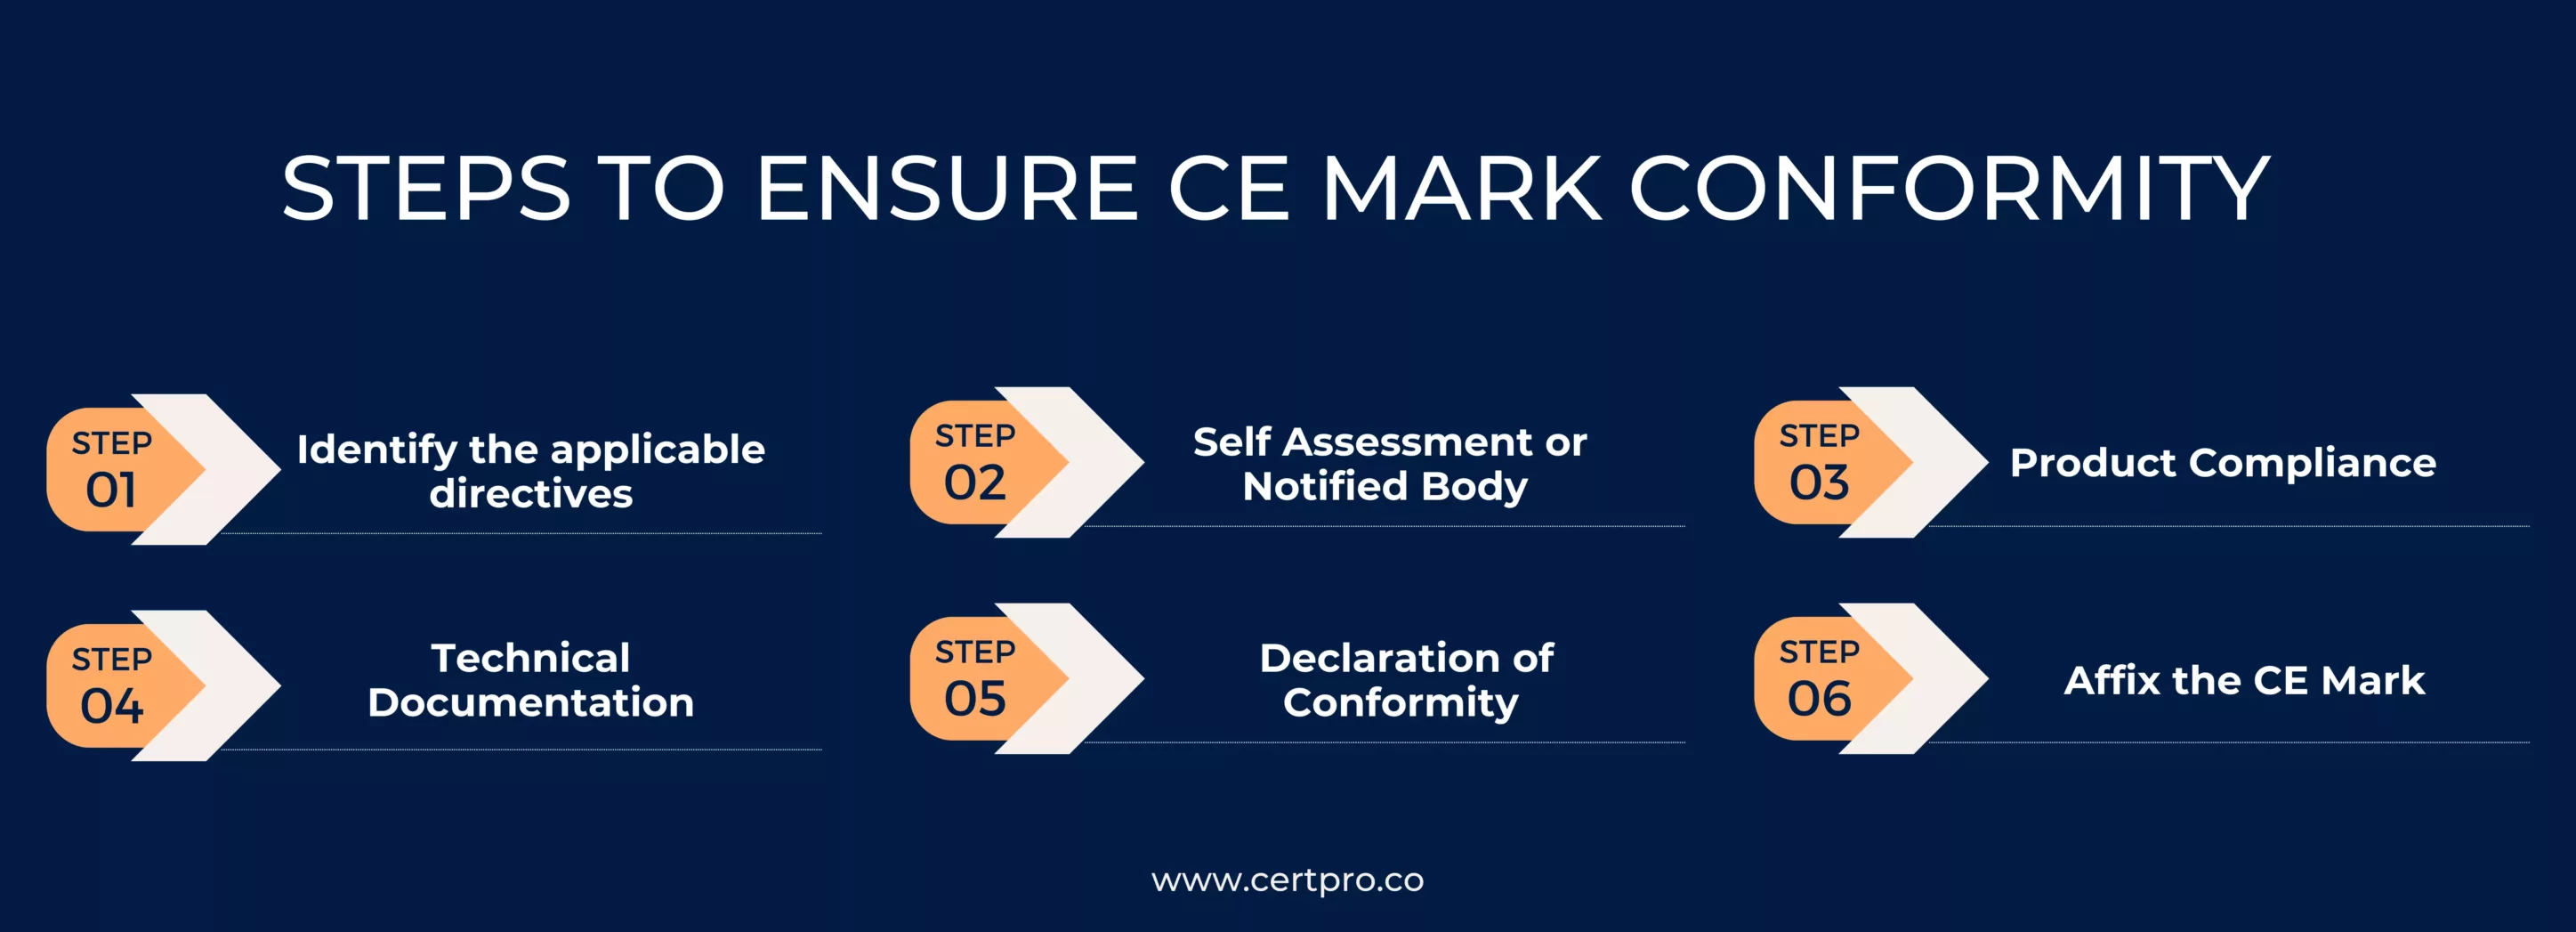 Steps to ensure CE mark conformity